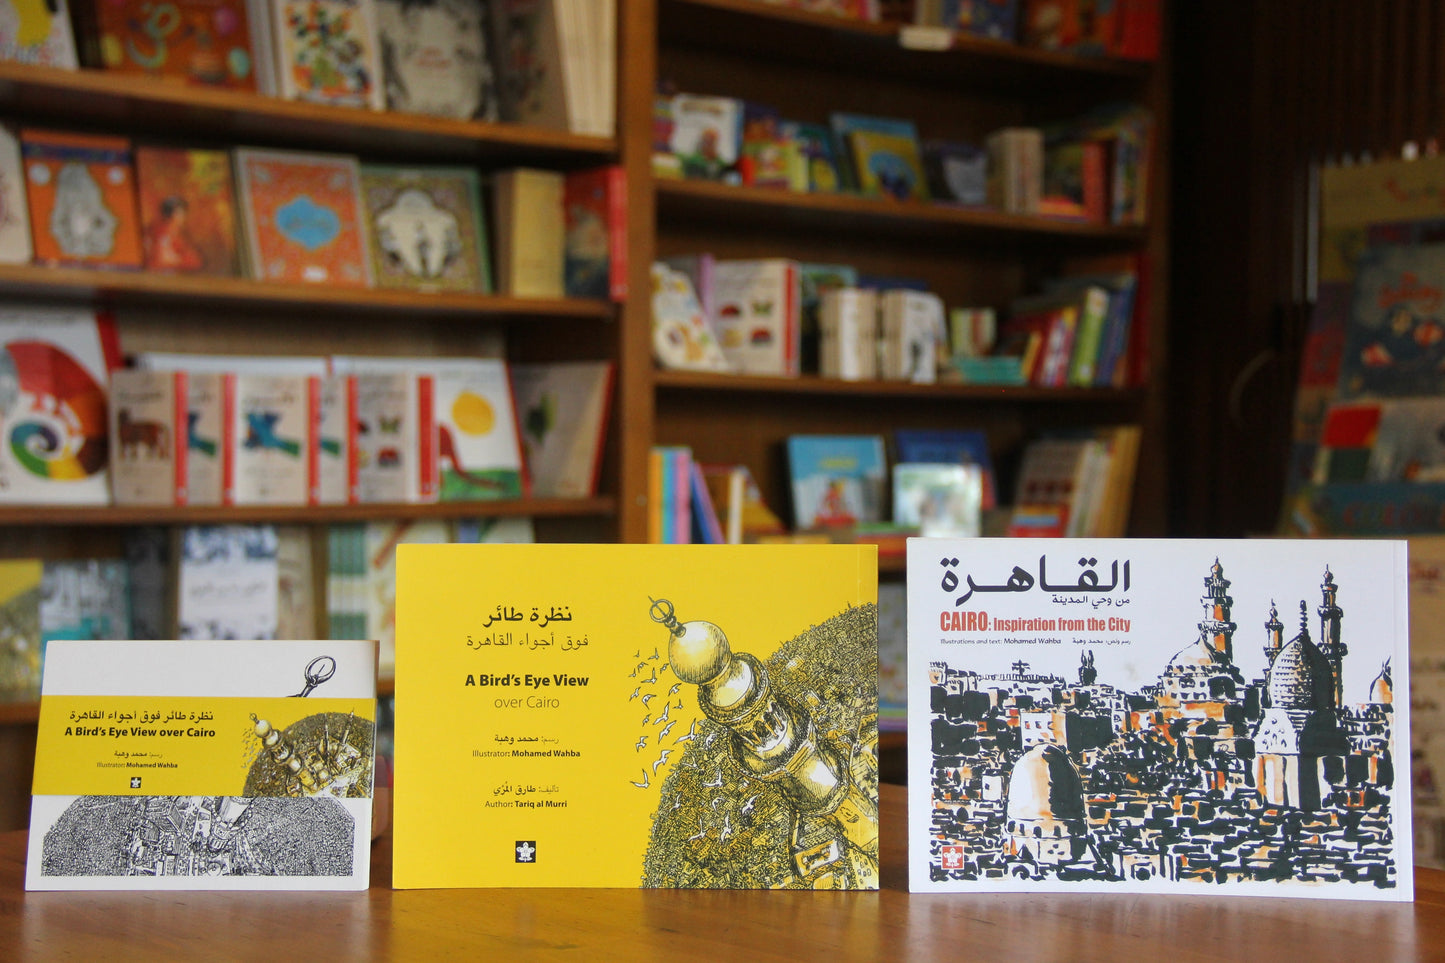 Cairo Collection and Post Cards by Mohamed Wahba - مجموعة القاهرة والكروت البريدية لمحمد وهبة